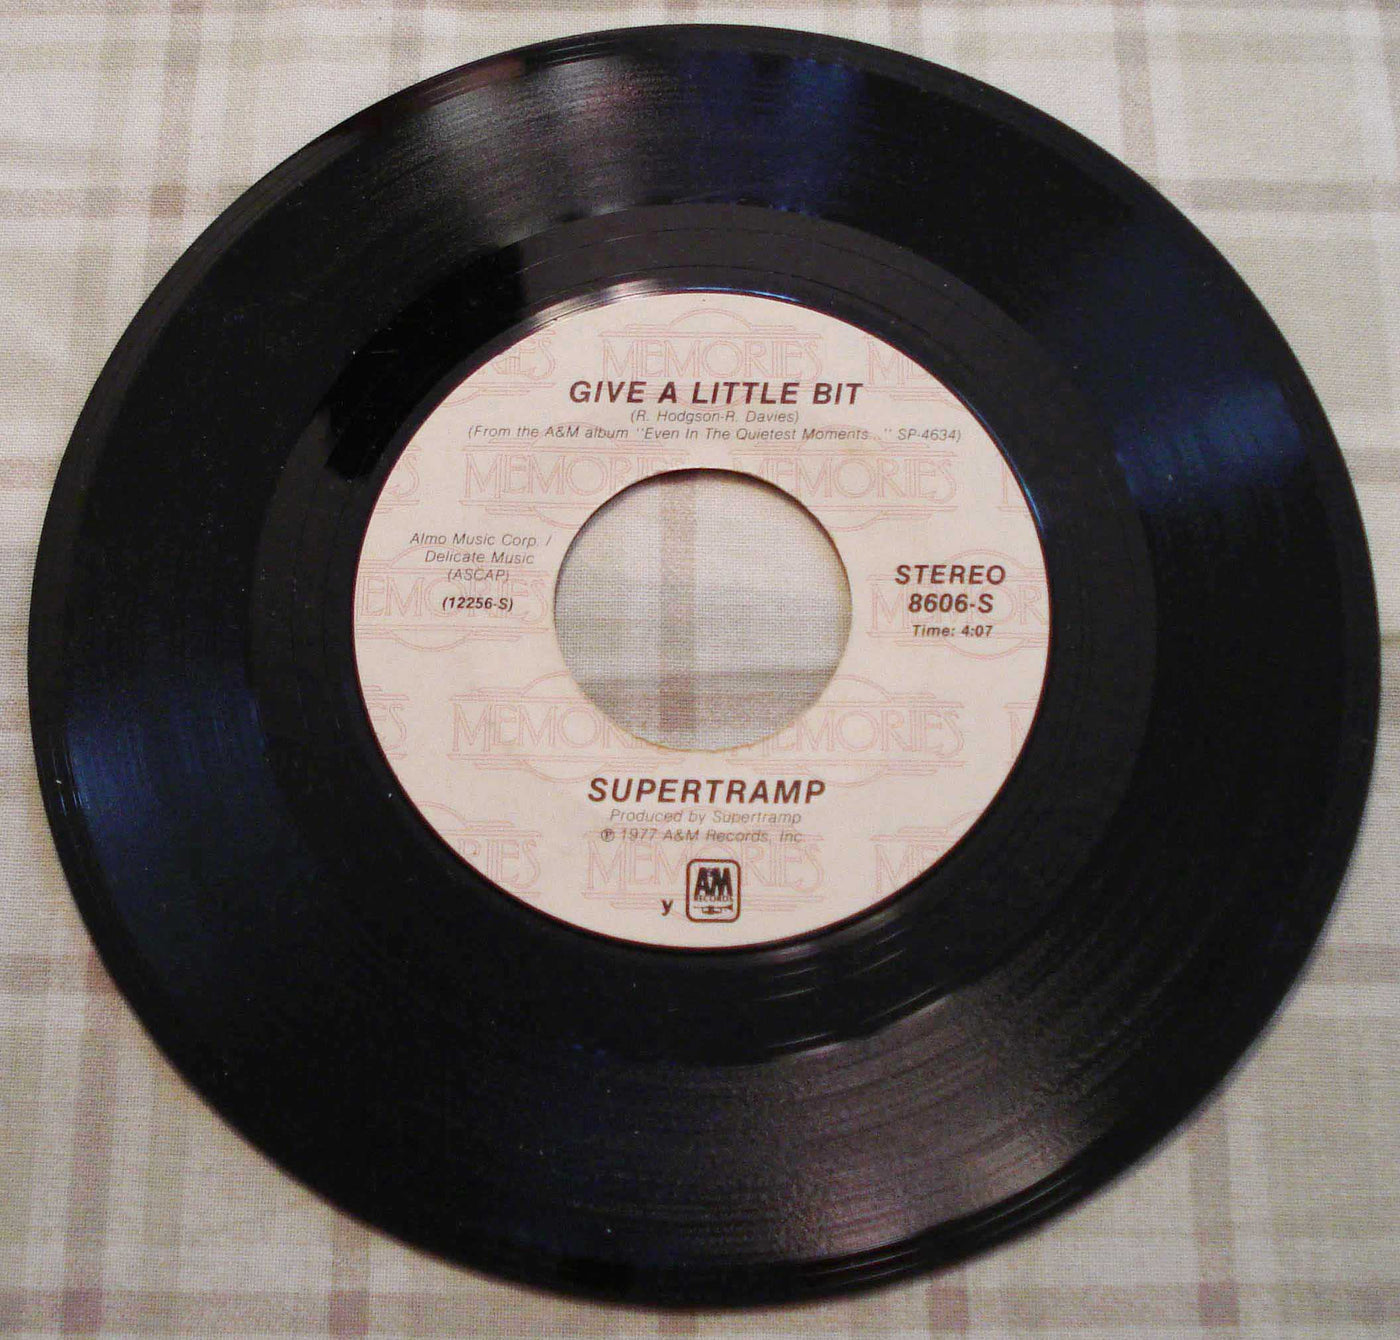 Supertramp - Give A Little Bit-Dreamer (1977) Vinyl Single 45rpm 8606-S